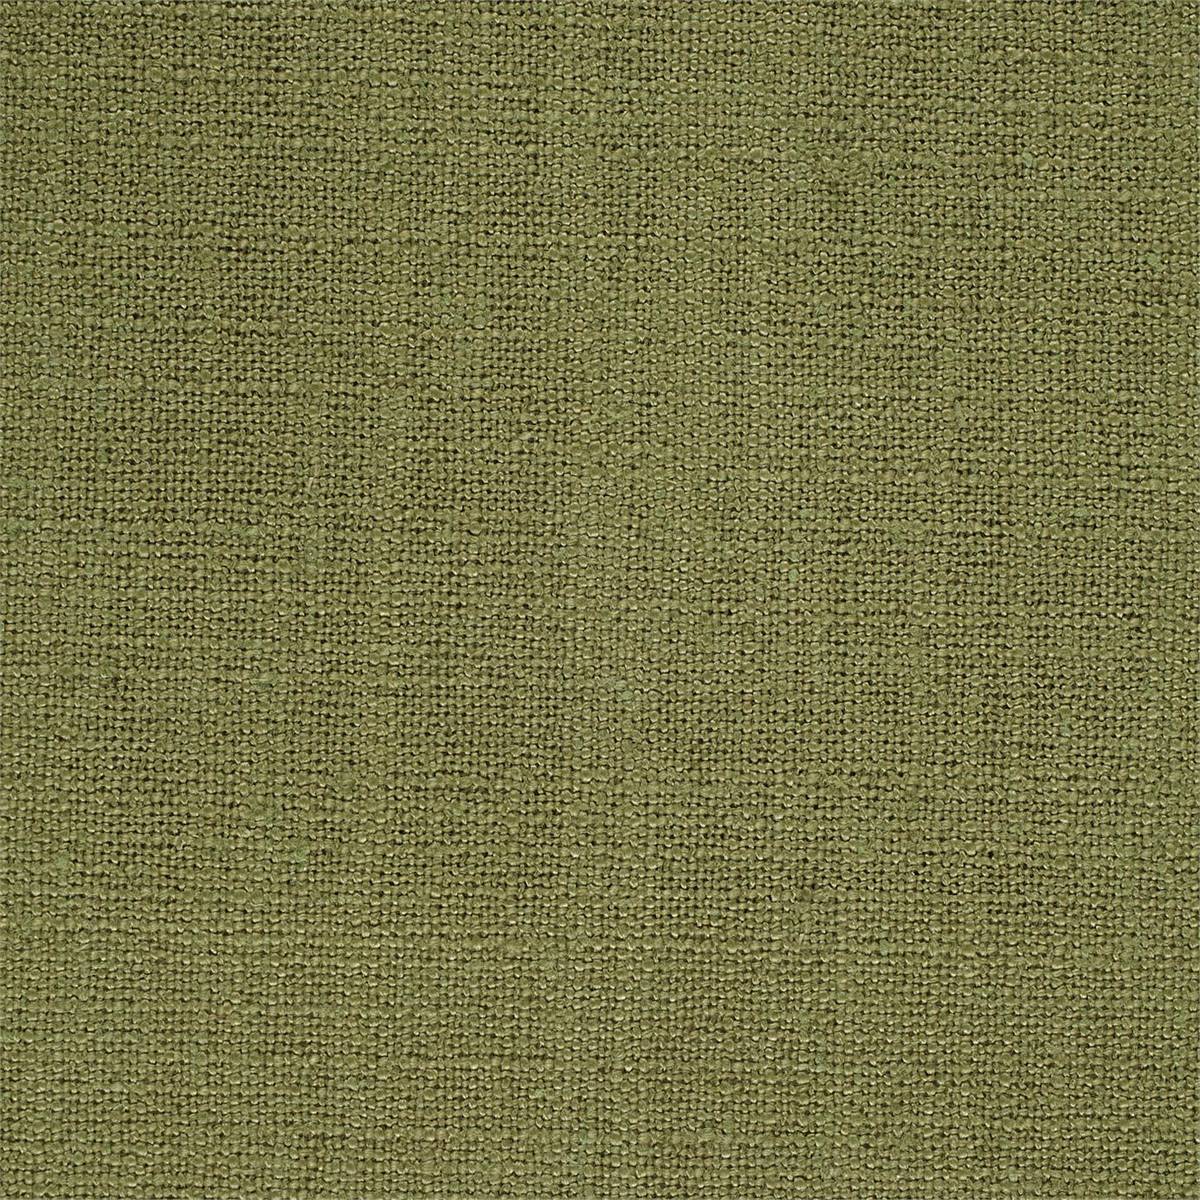 Lagom Grass Fabric by Sanderson